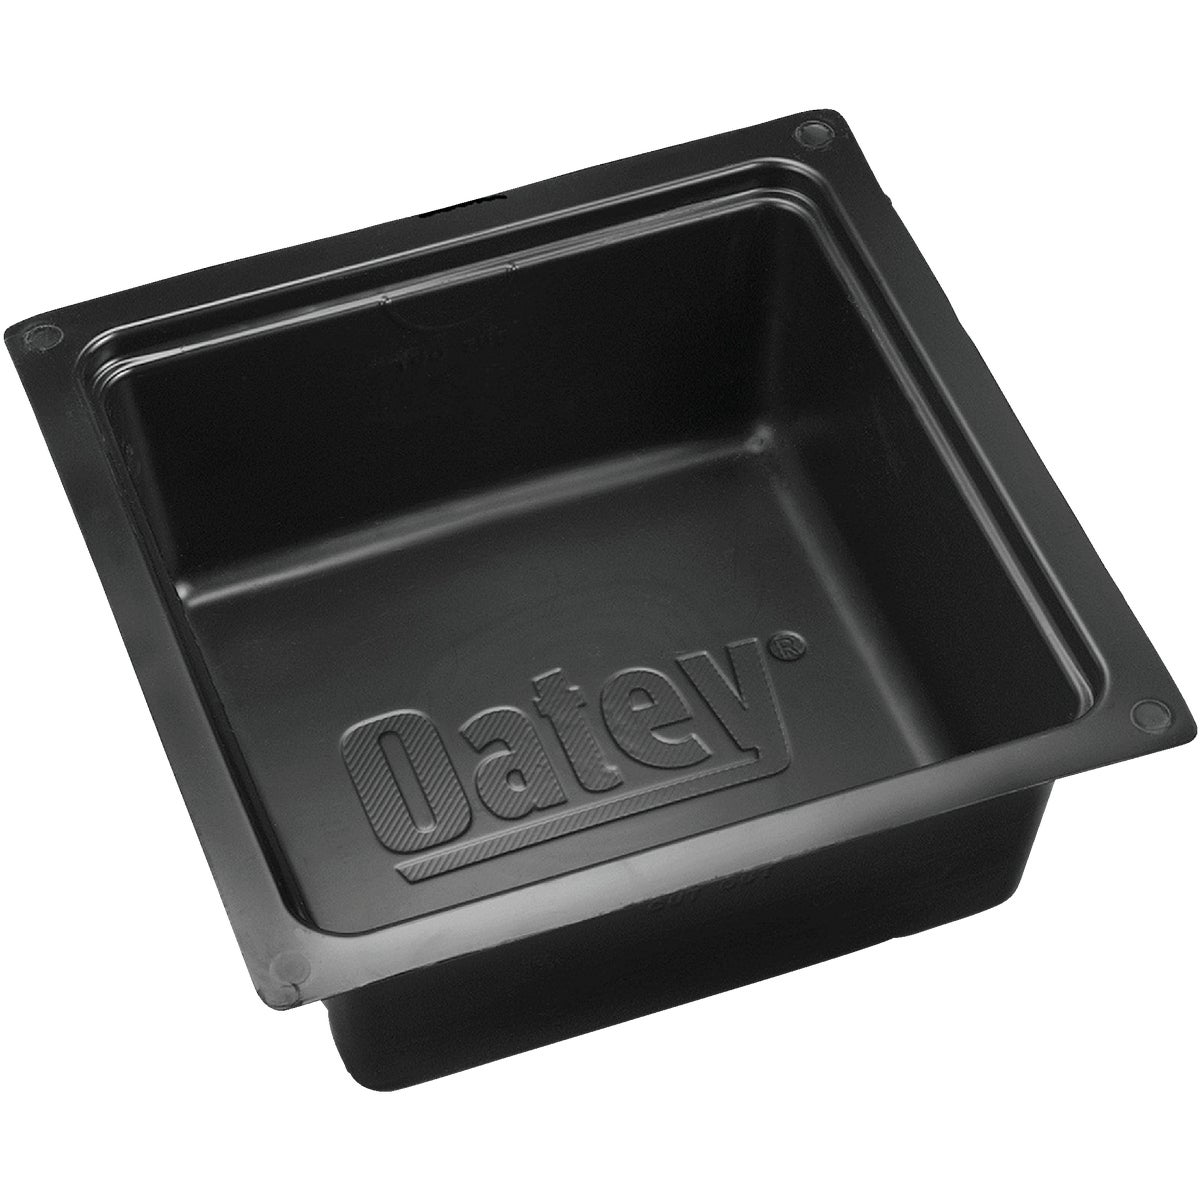 Oatey Standard Tub Box for 1-1/2 In. or 2 In. Drain